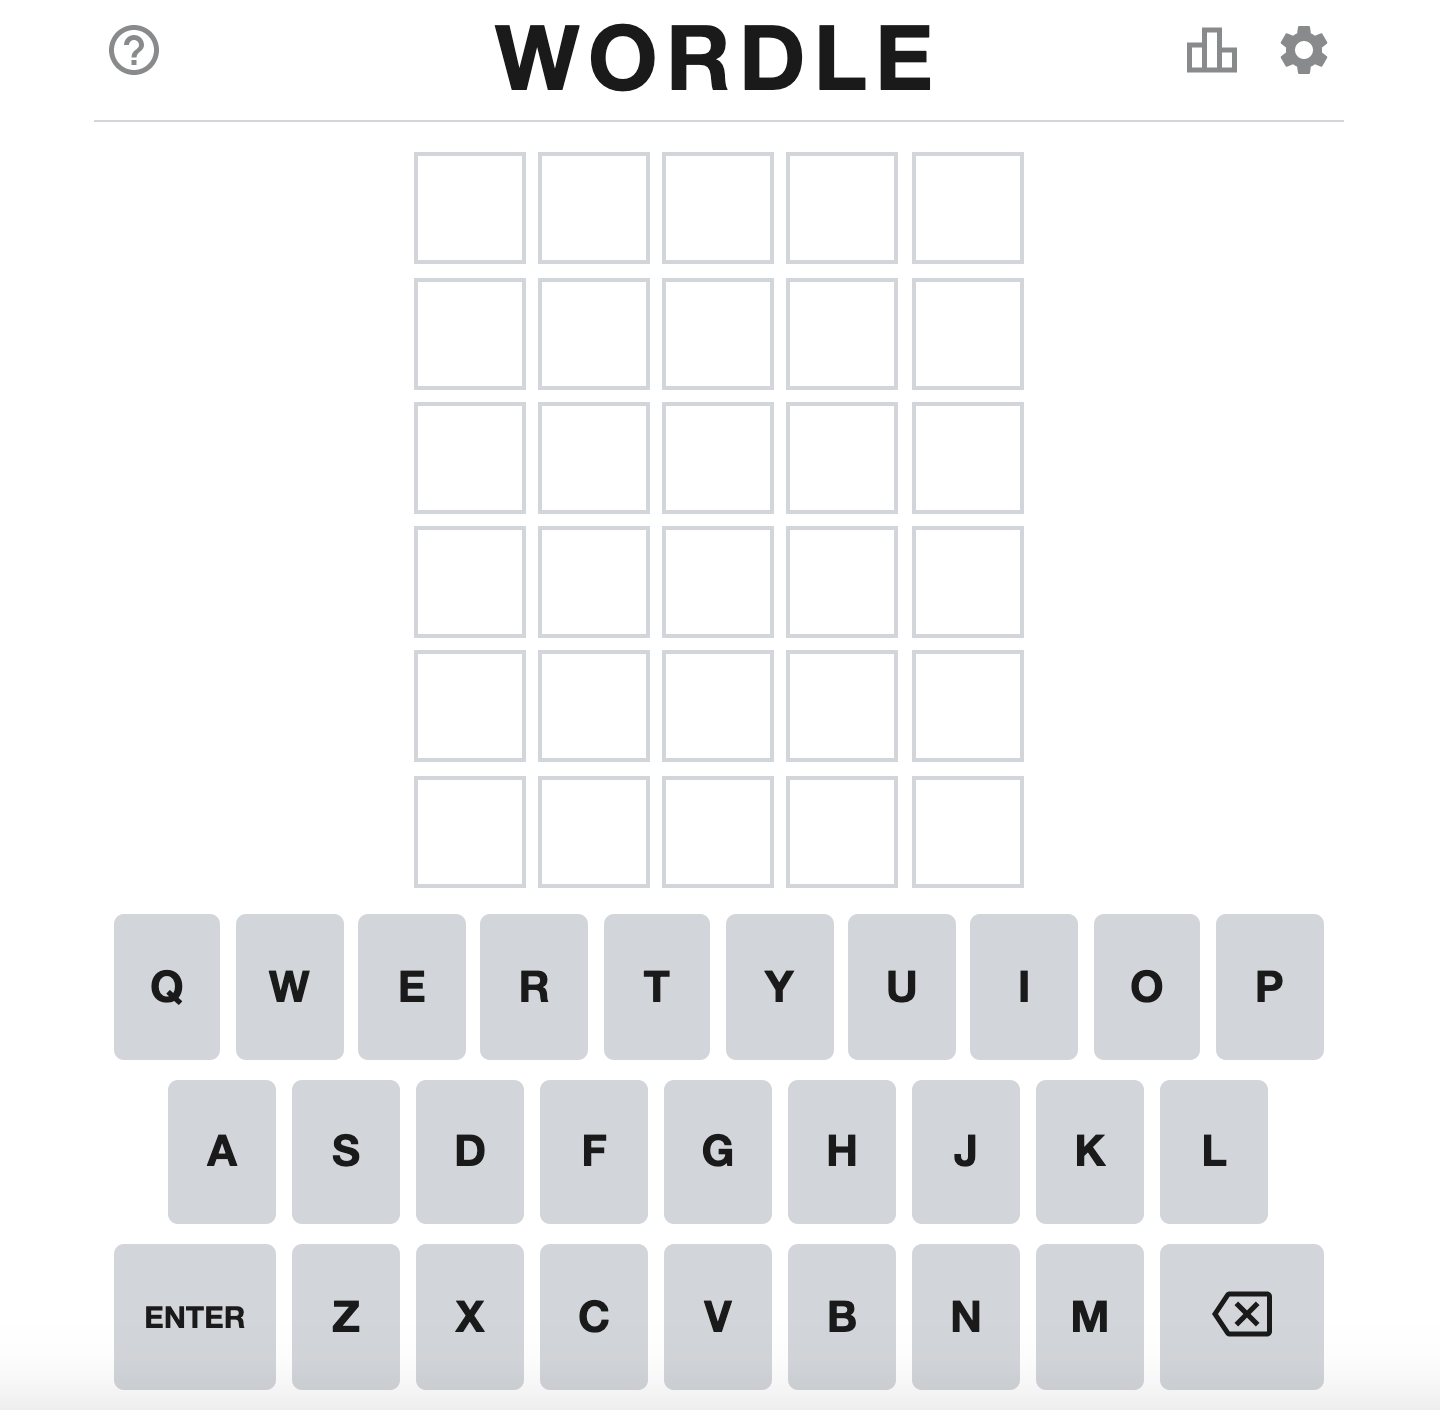 Word Games Like Wordle and Mywordle Help Make Language More